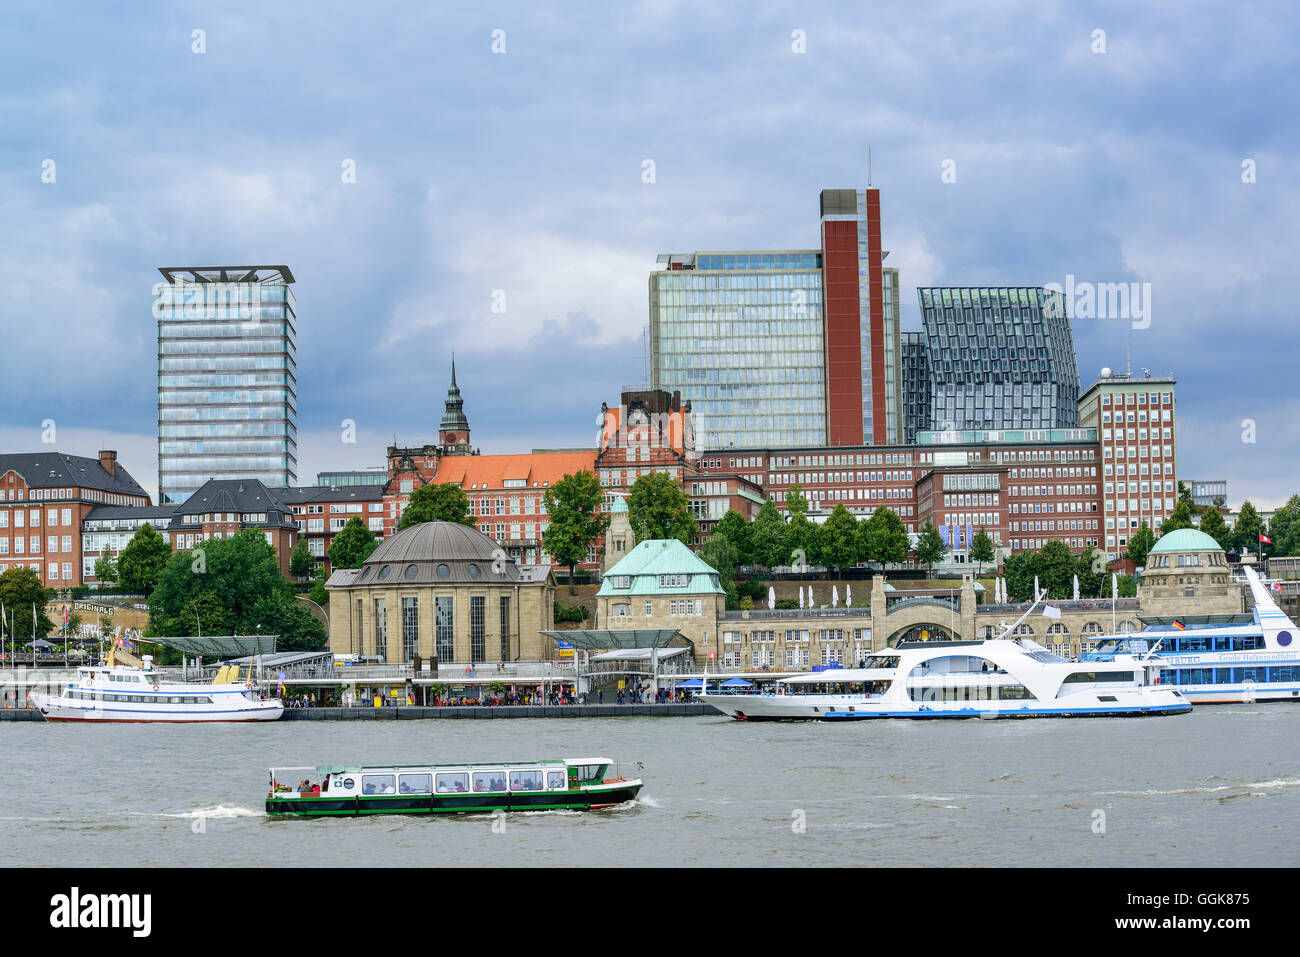 River Elbe with St. Pauli-Landungsbruecken and skyscrapers in the background, Landungsbruecken, Hamburg, Germany Stock Photo